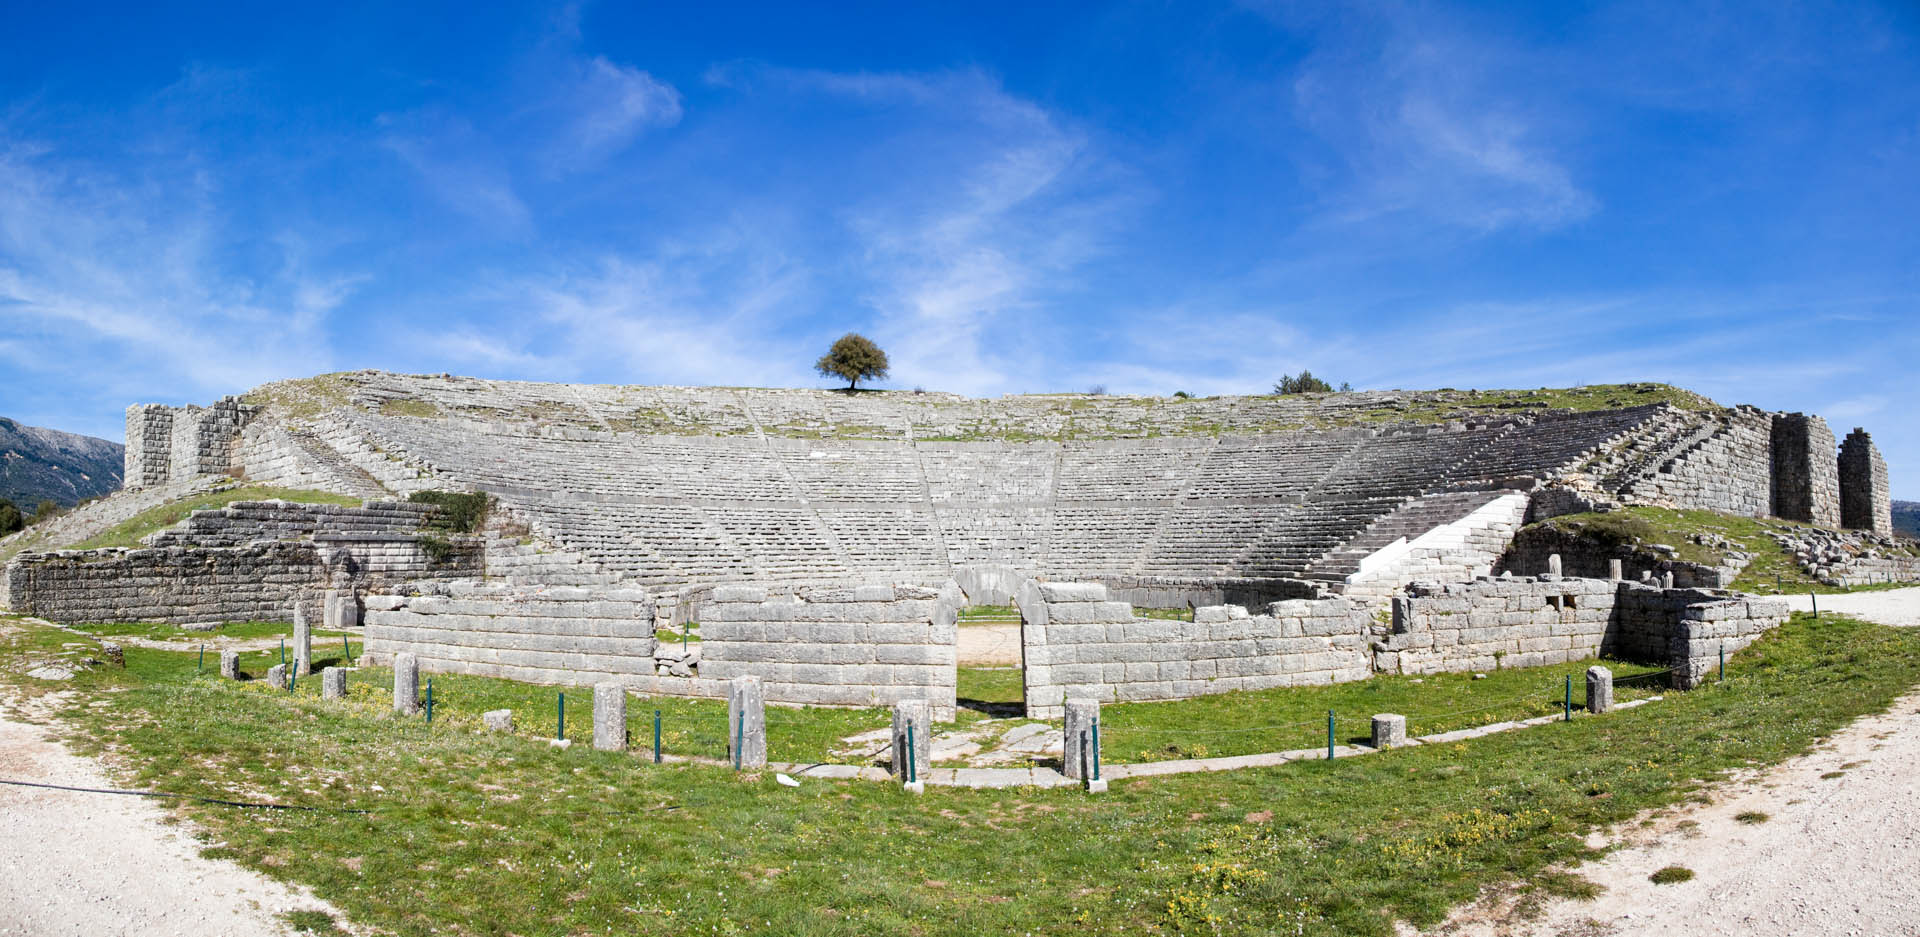 More information about "Στο ΕΣΠΑ με 5 εκ. η αναστήλωση του Θεάτρου της Δωδώνης"